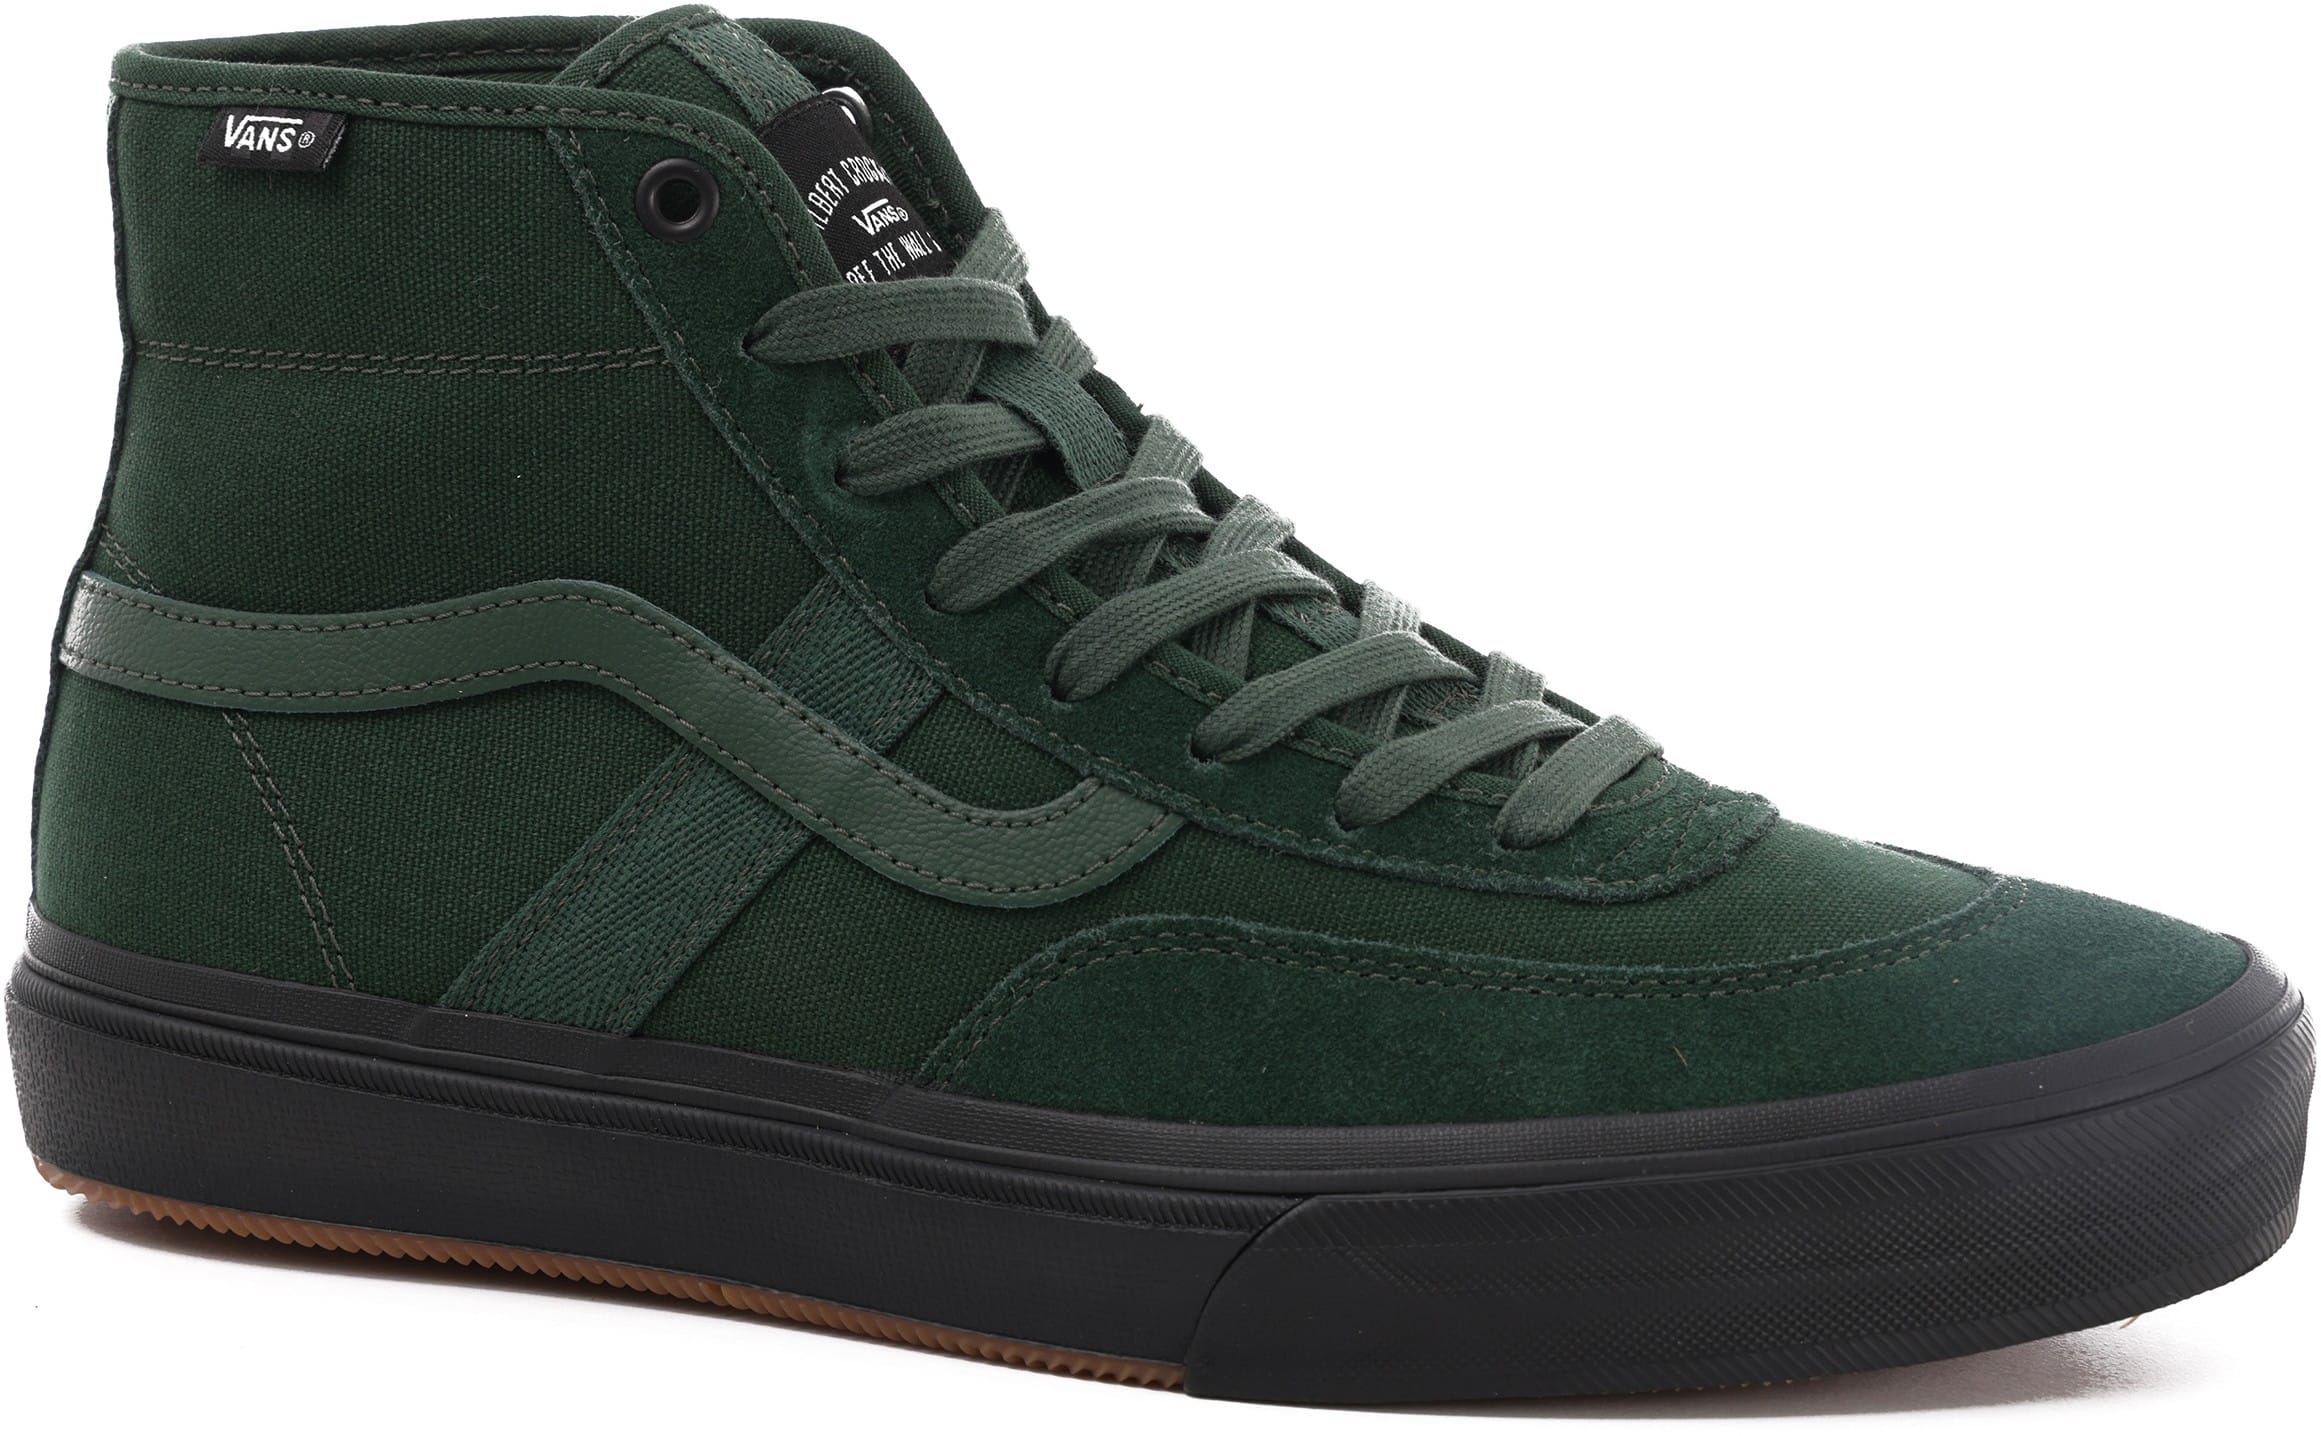 Vans Crockett Pro High Top Skate Shoes - dark green/black - Free ...